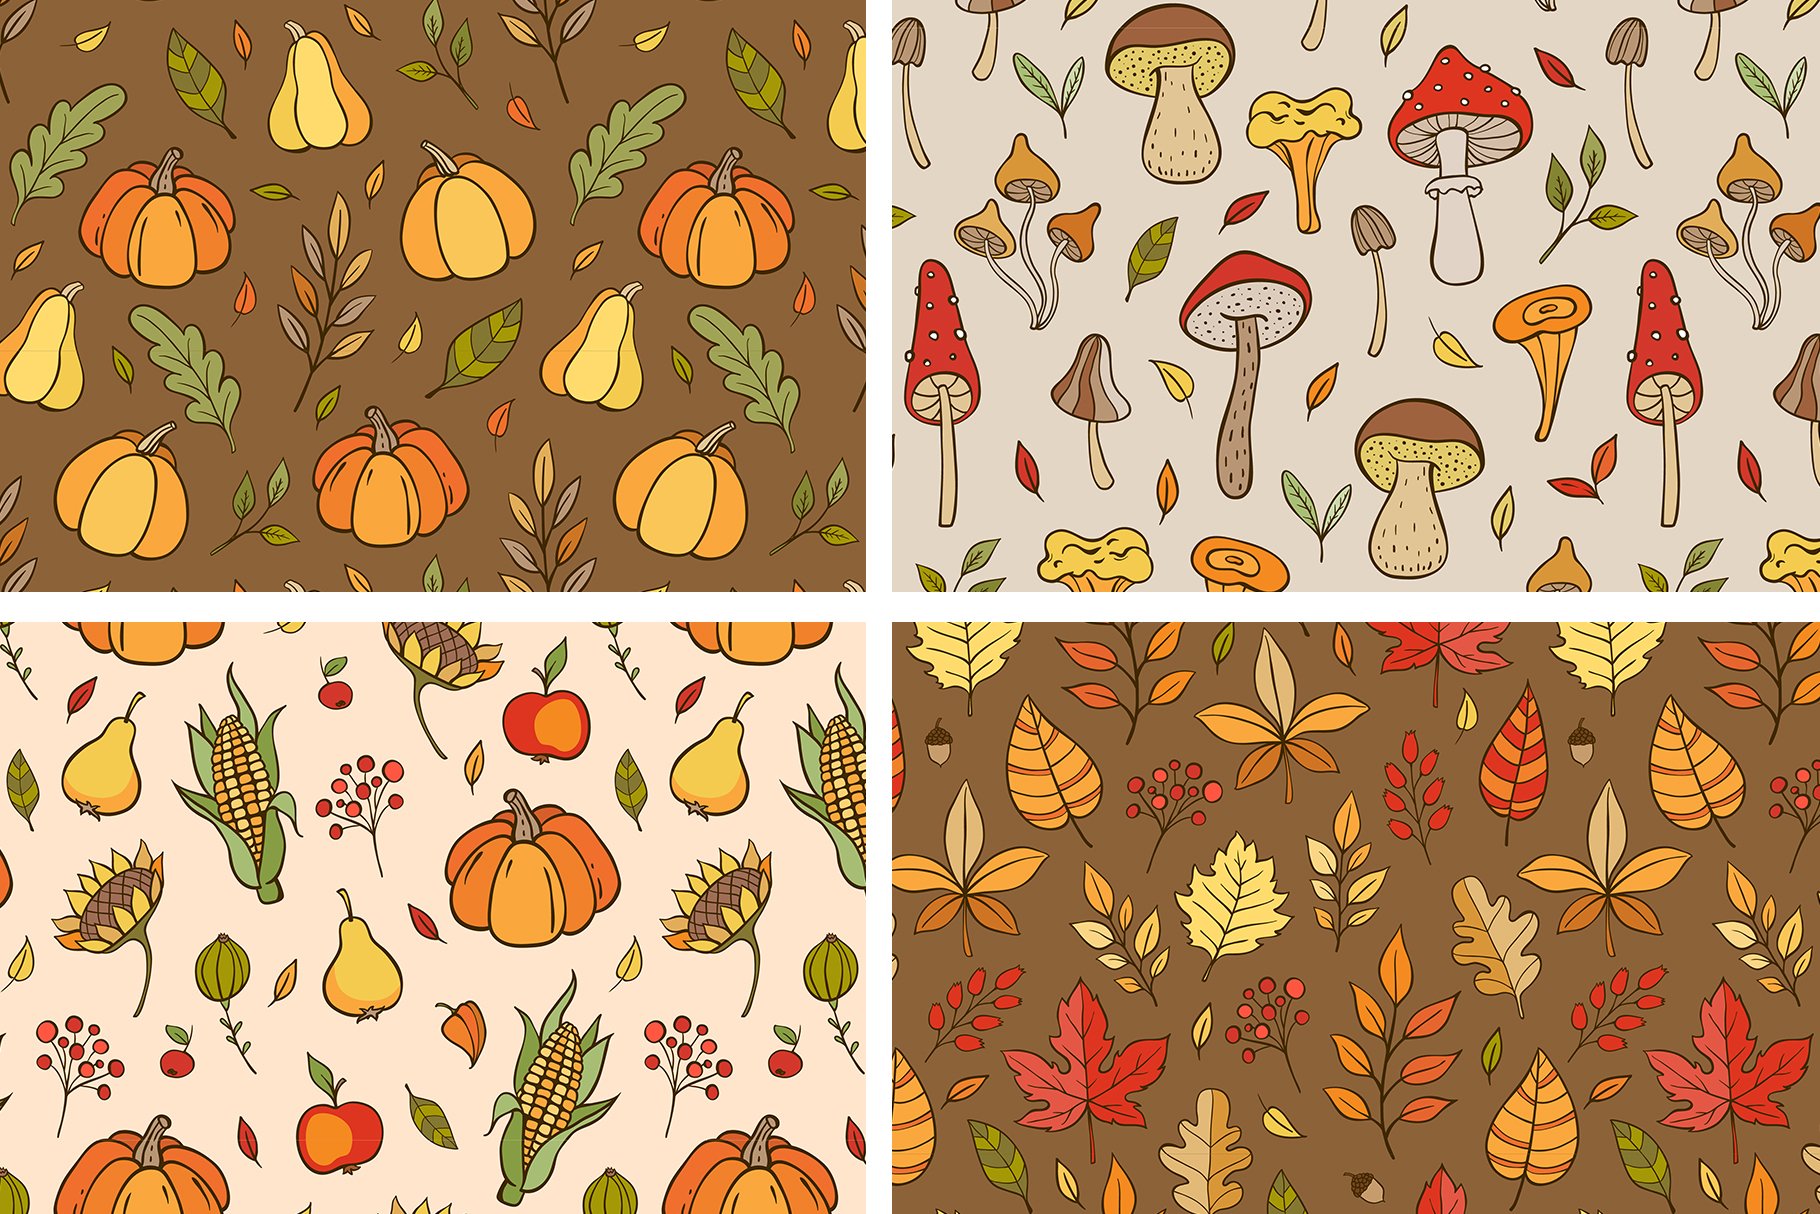 Autumn doodle & lettering kit. By Sentimental Postman